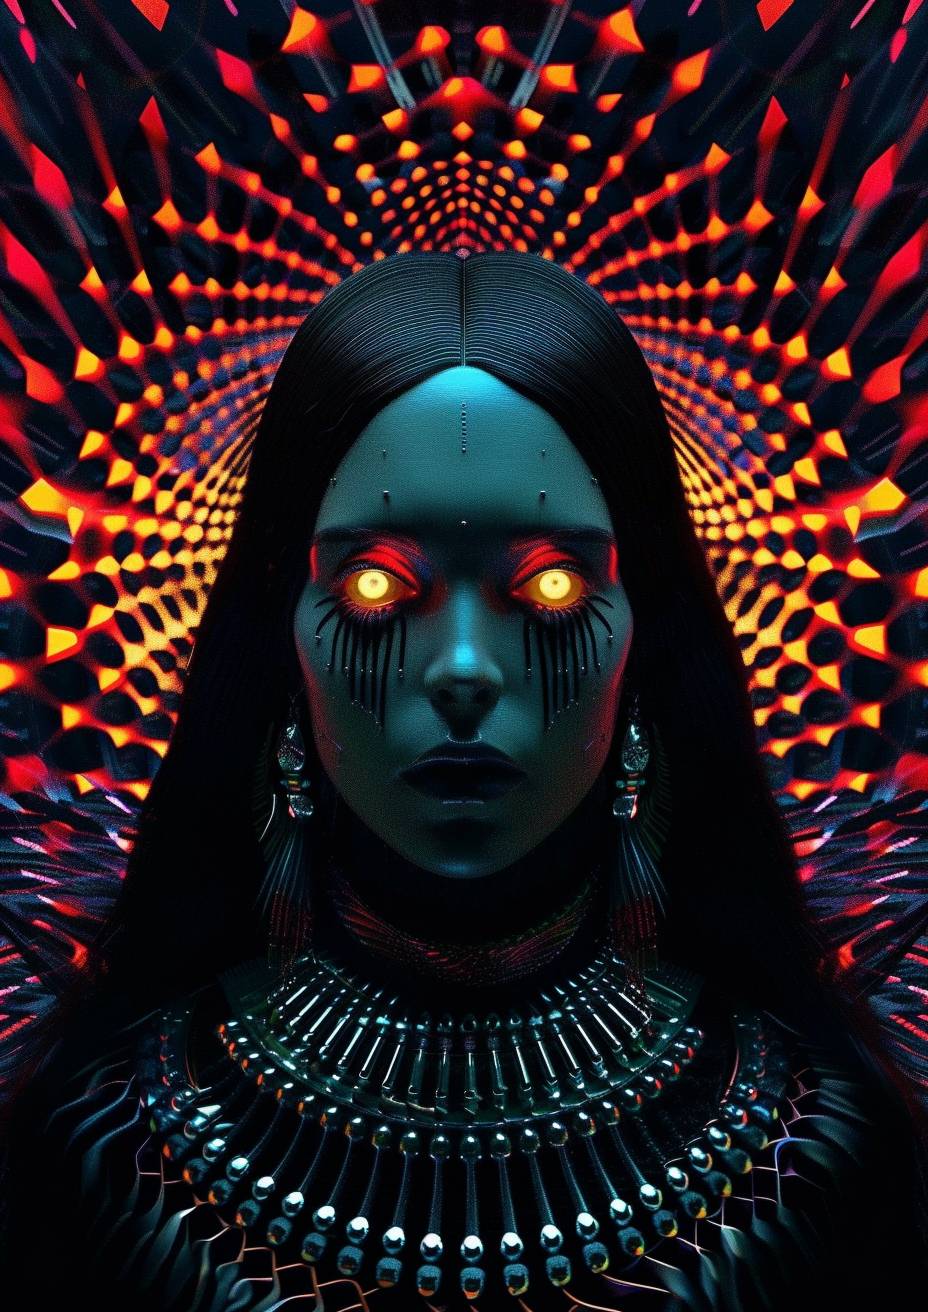 Cyberpunk witch, gold glowing eyes, silver jewelry, vast haunted OpenAI NSA data center